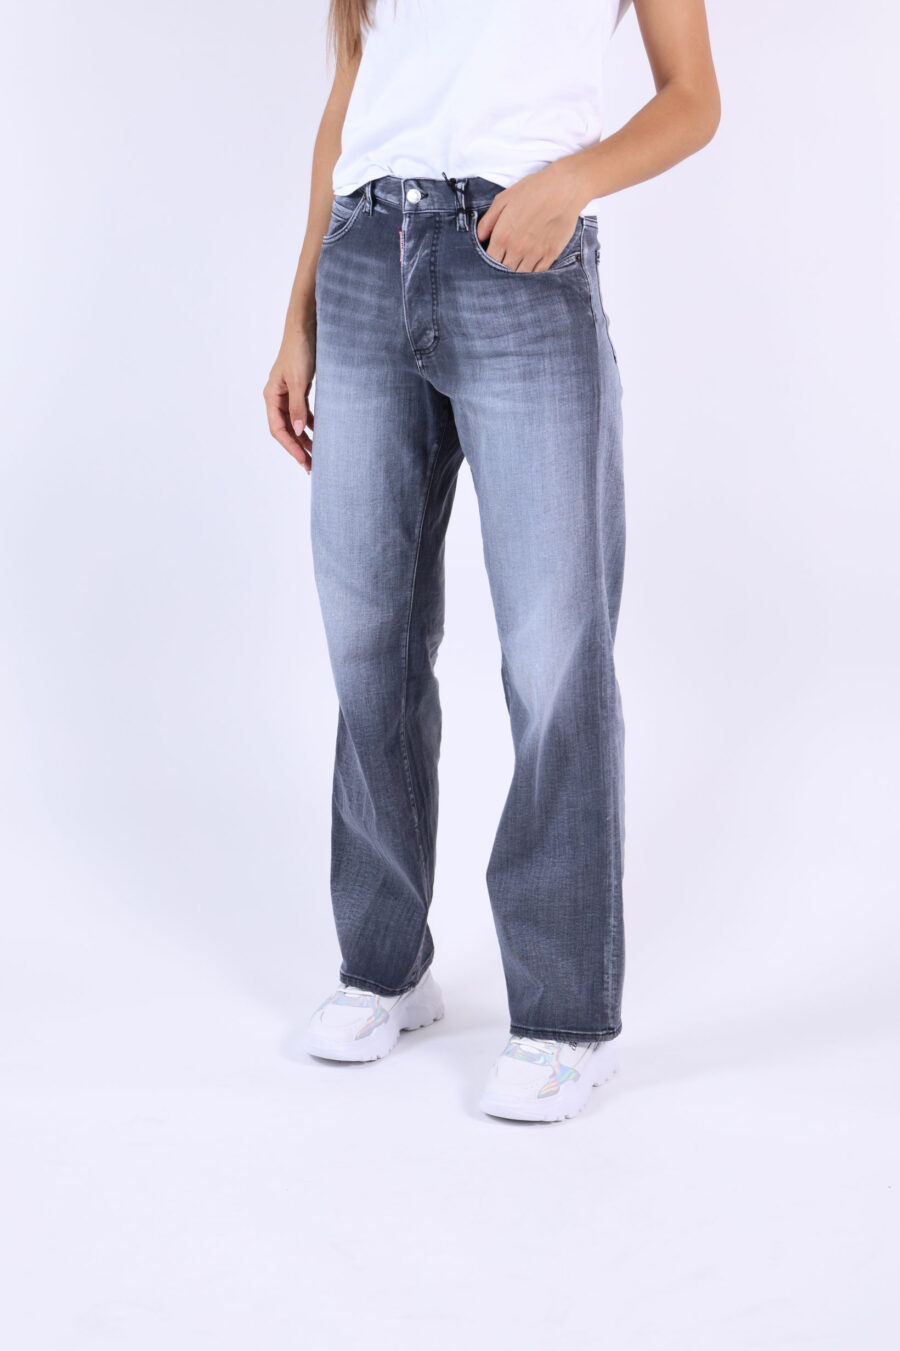 Jeans "San Diego jean" noir usé - 361223054662201938 1